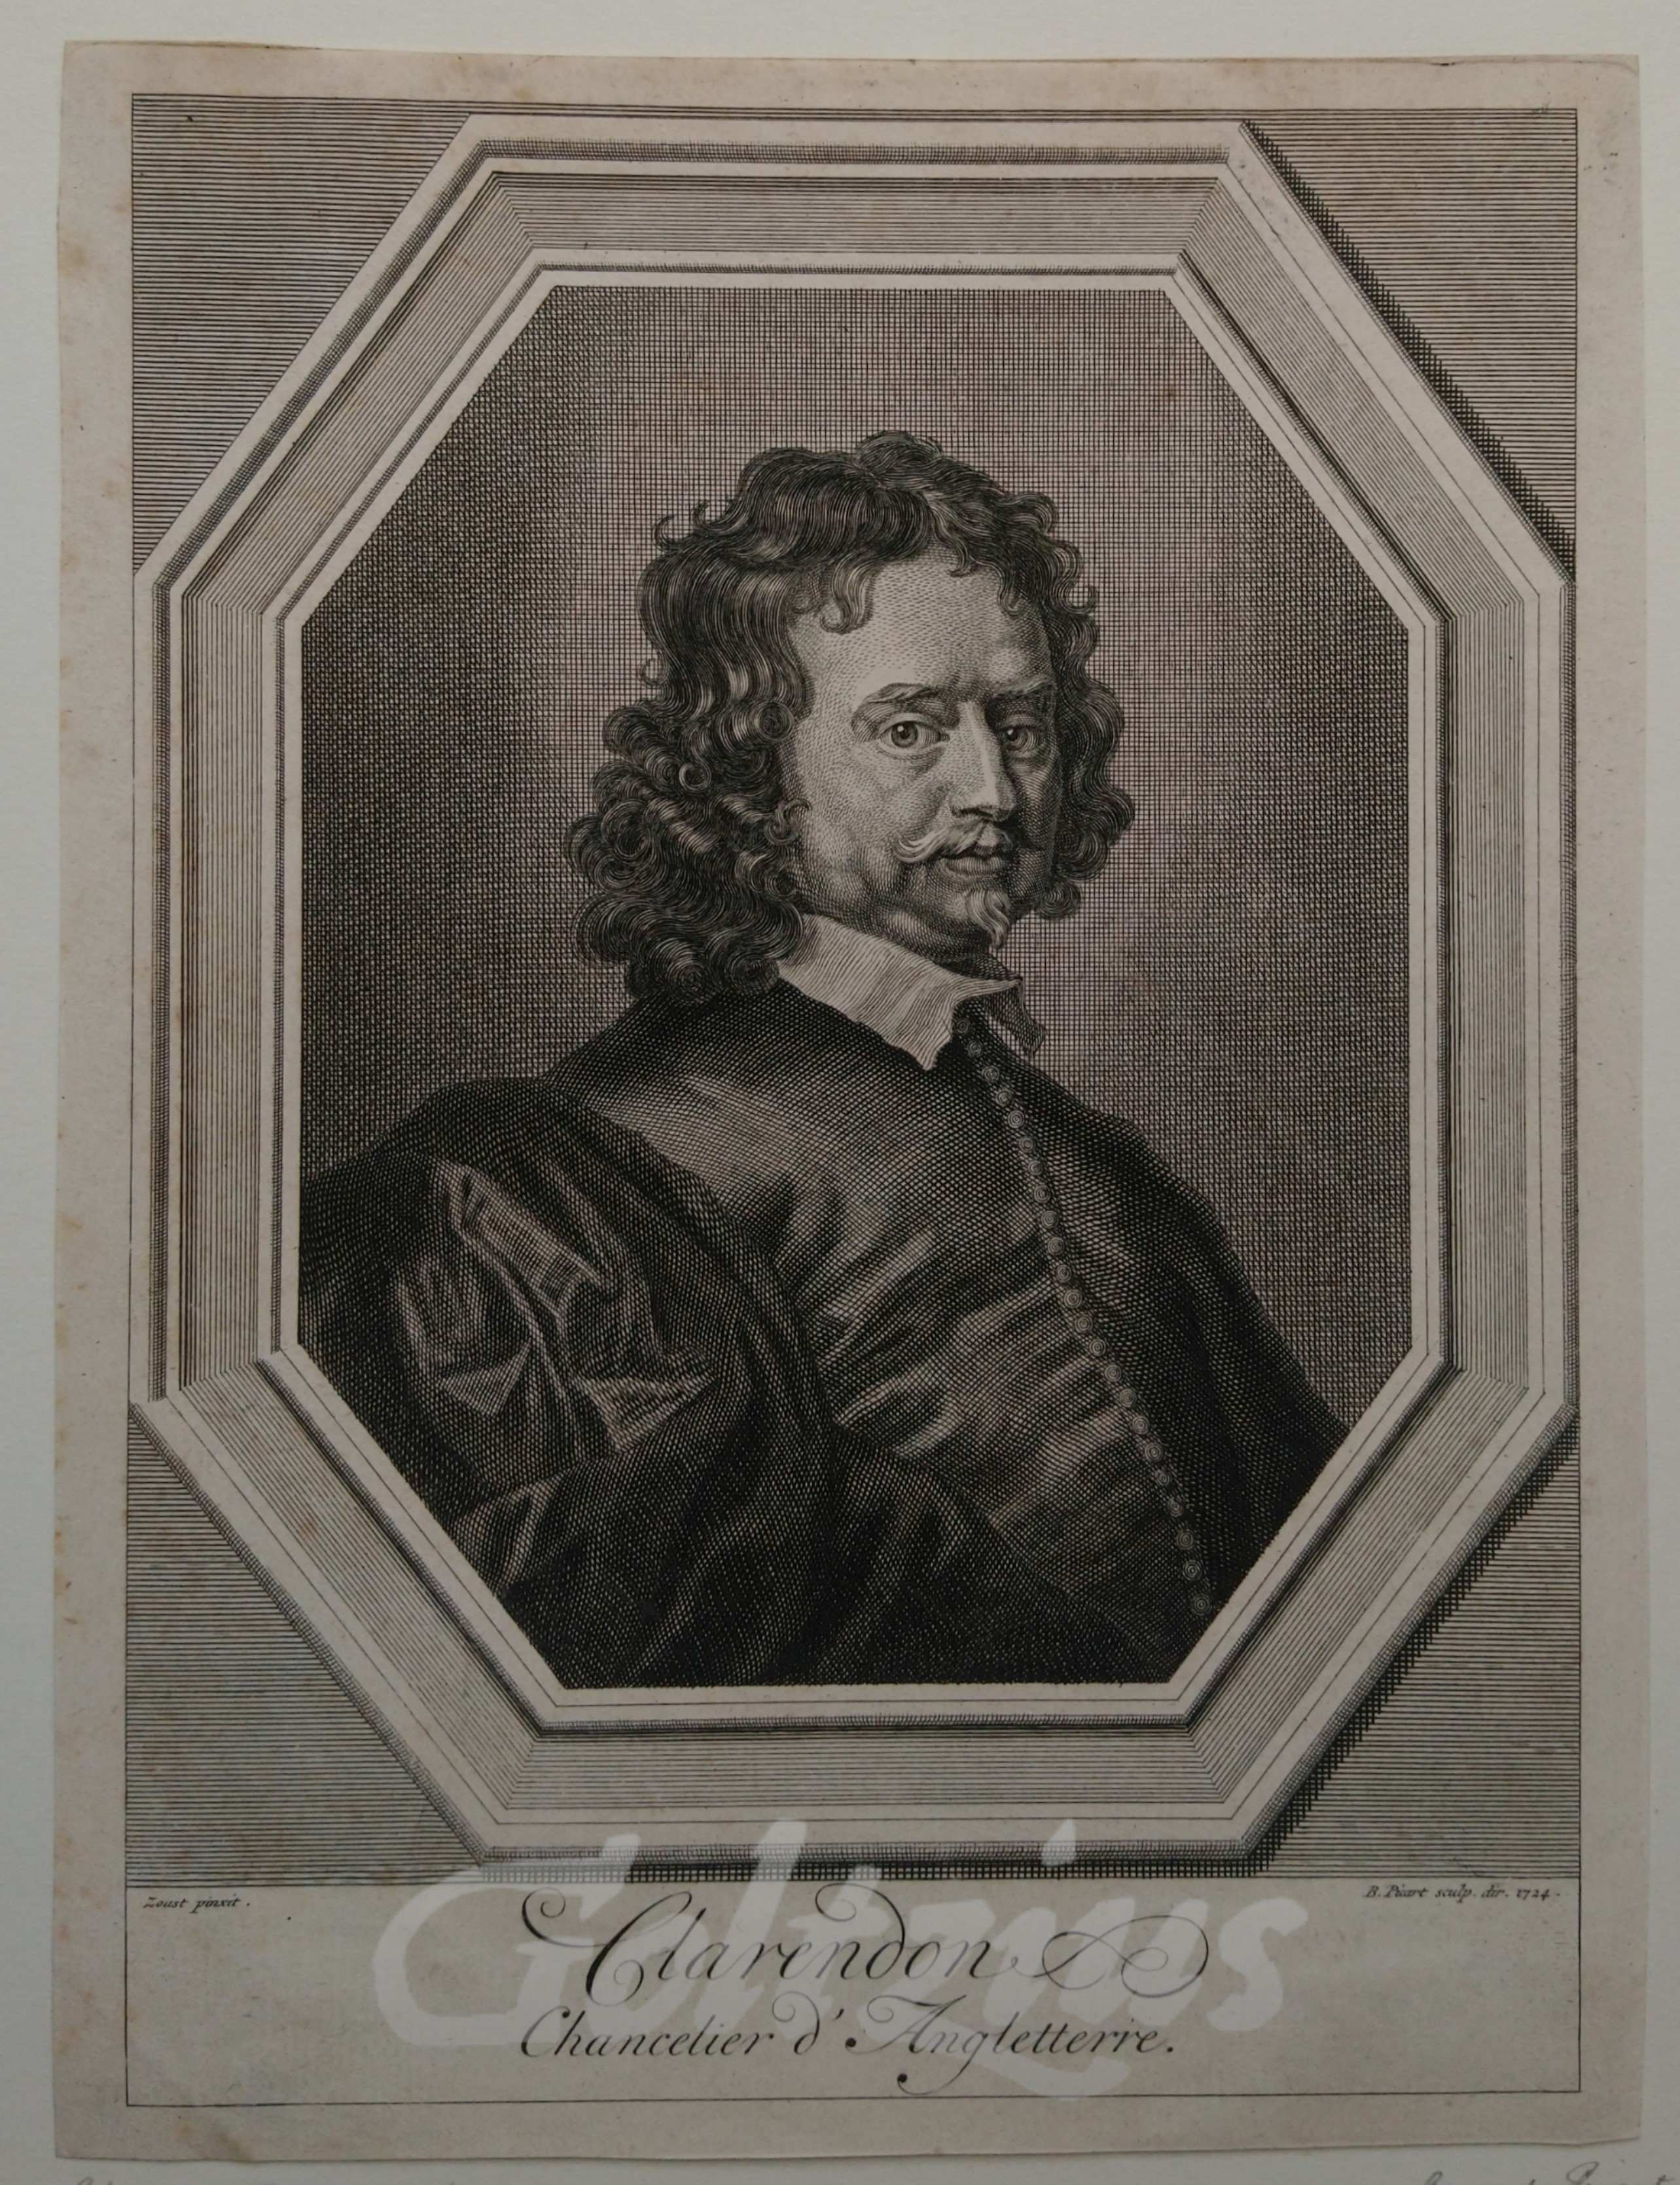 PICART, BERNARD (1673-1733), Clarendon Chancelier d'Angleterre